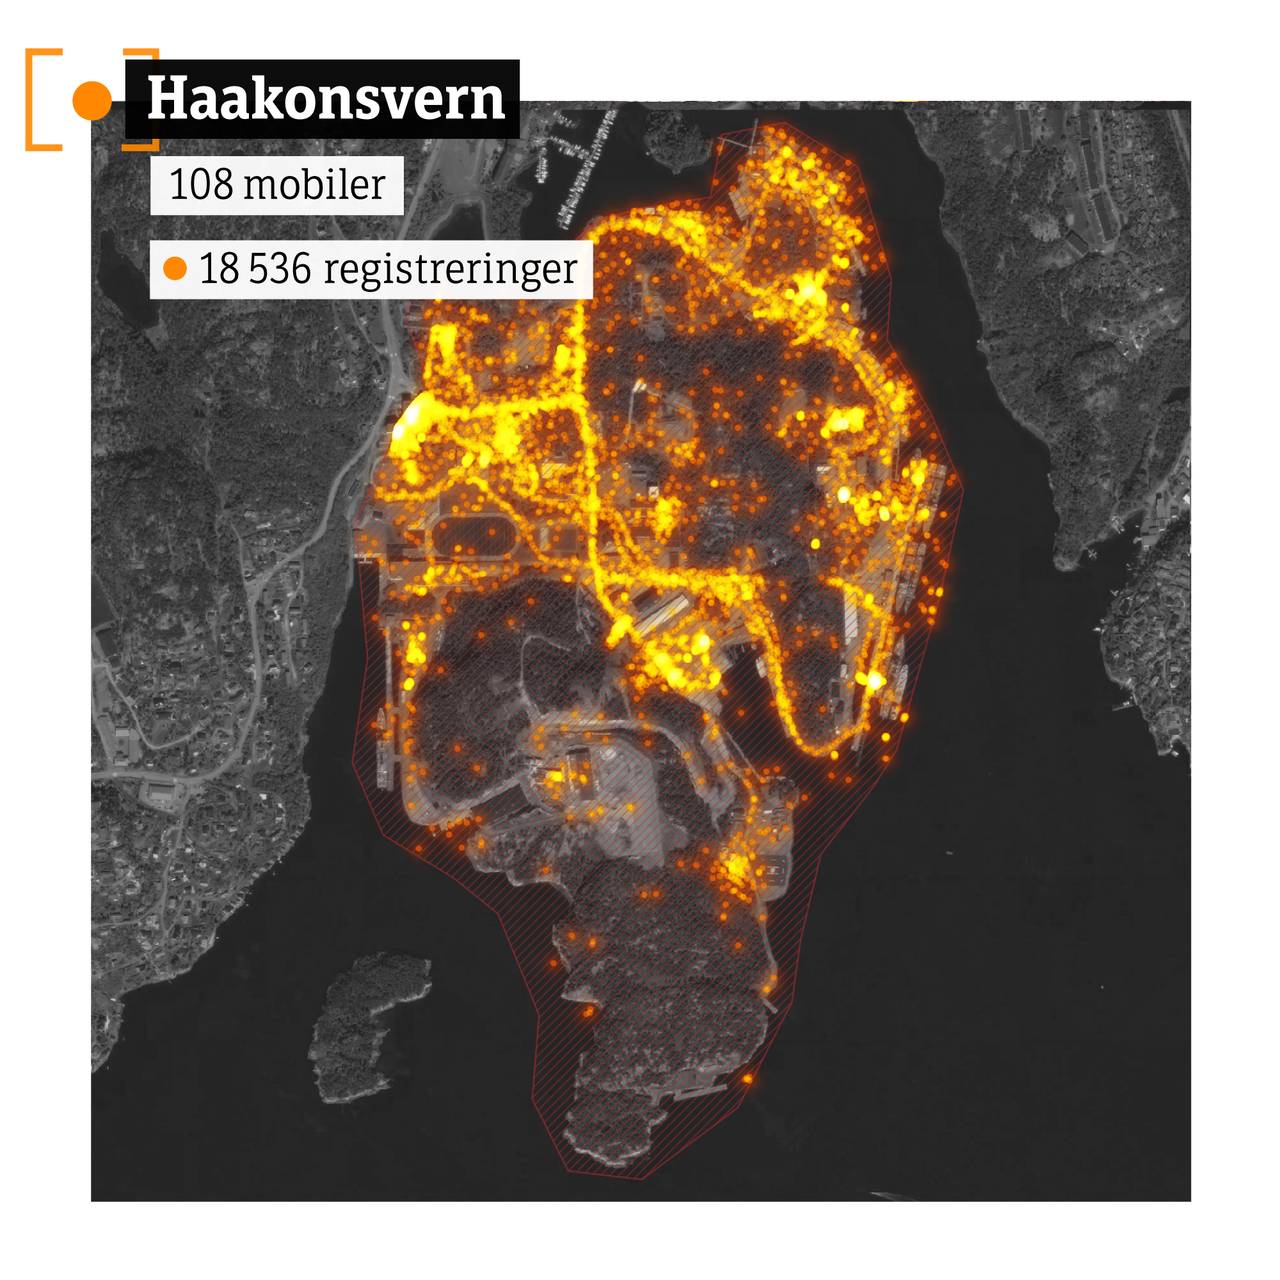 Kart over Haakonsvern, med oransje punkter. Tekst: 